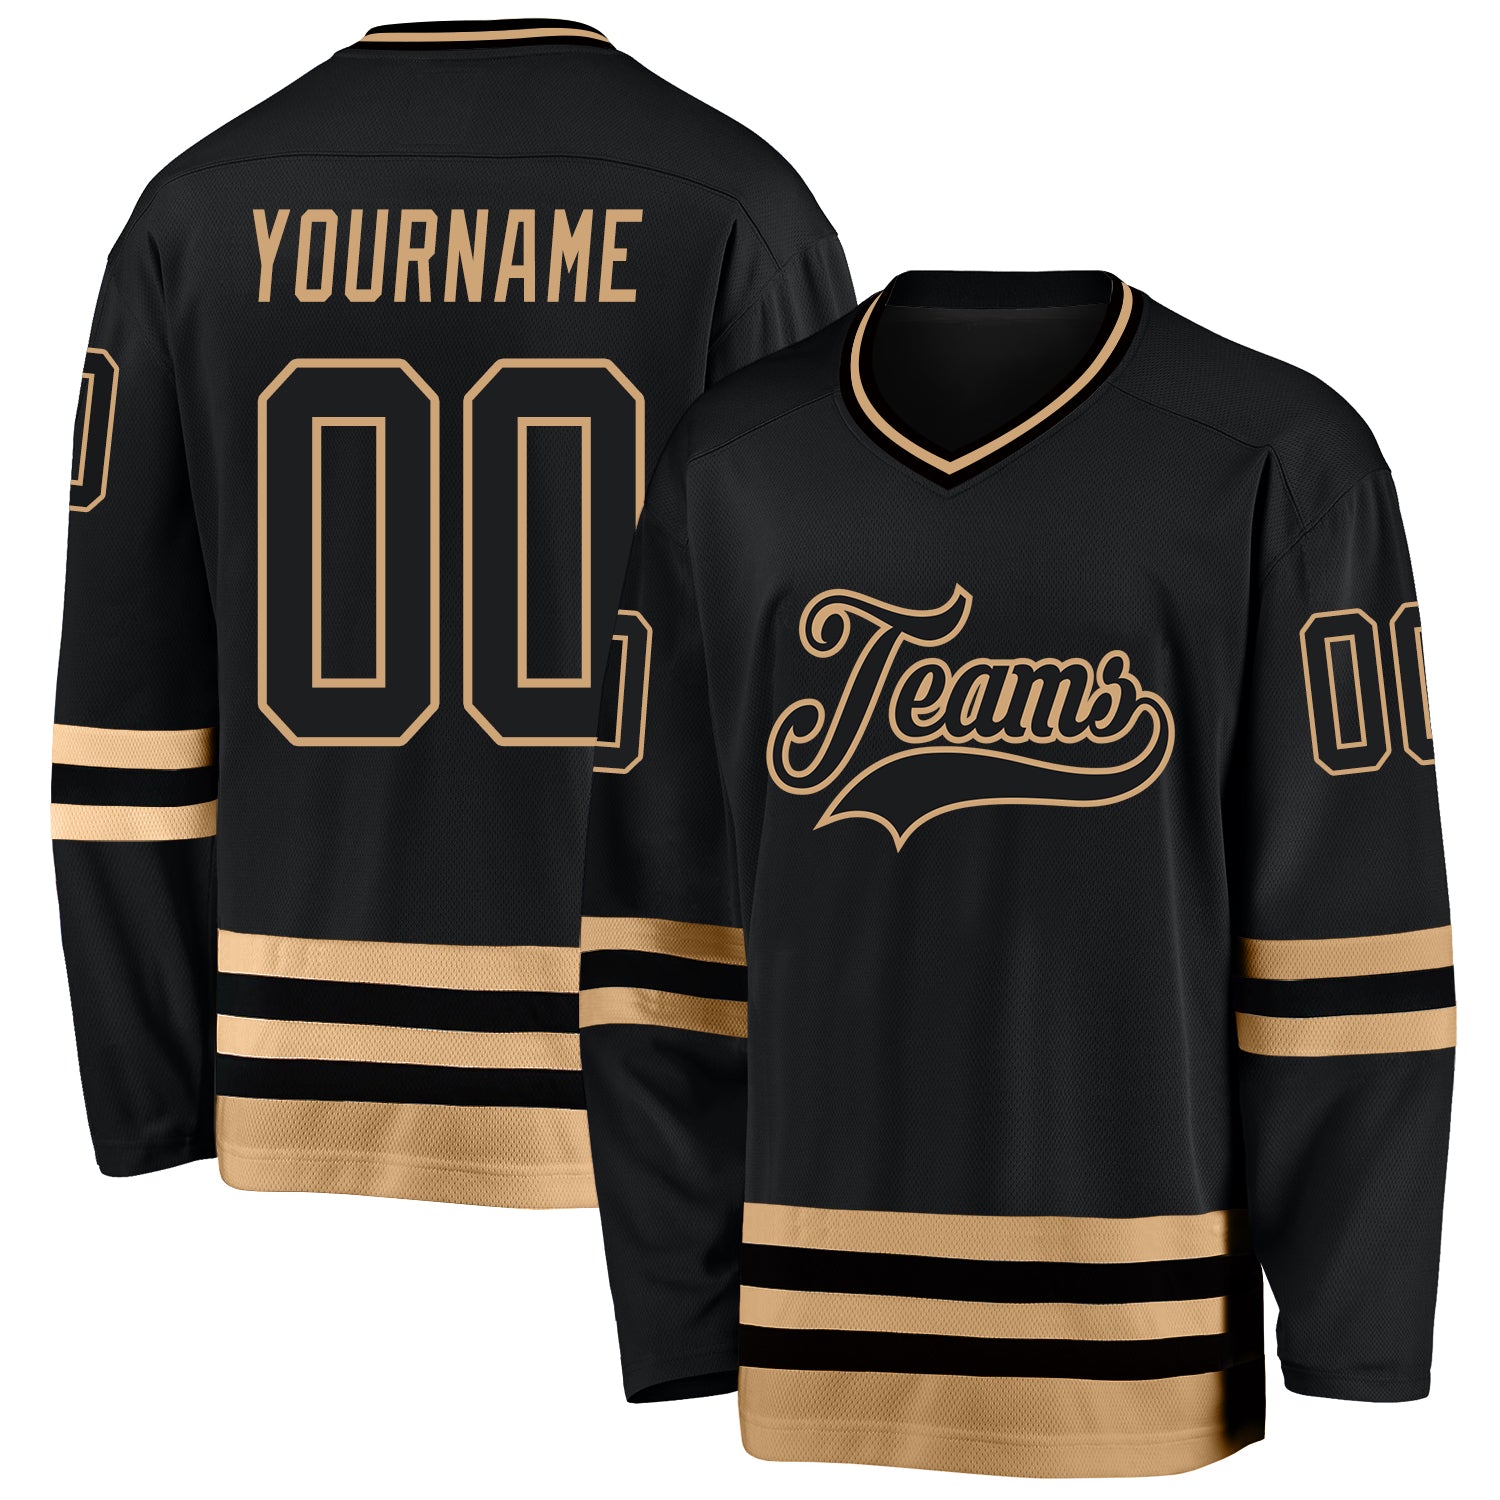 Cheap Custom Old Gold Black Hockey Jersey Free Shipping – CustomJerseysPro